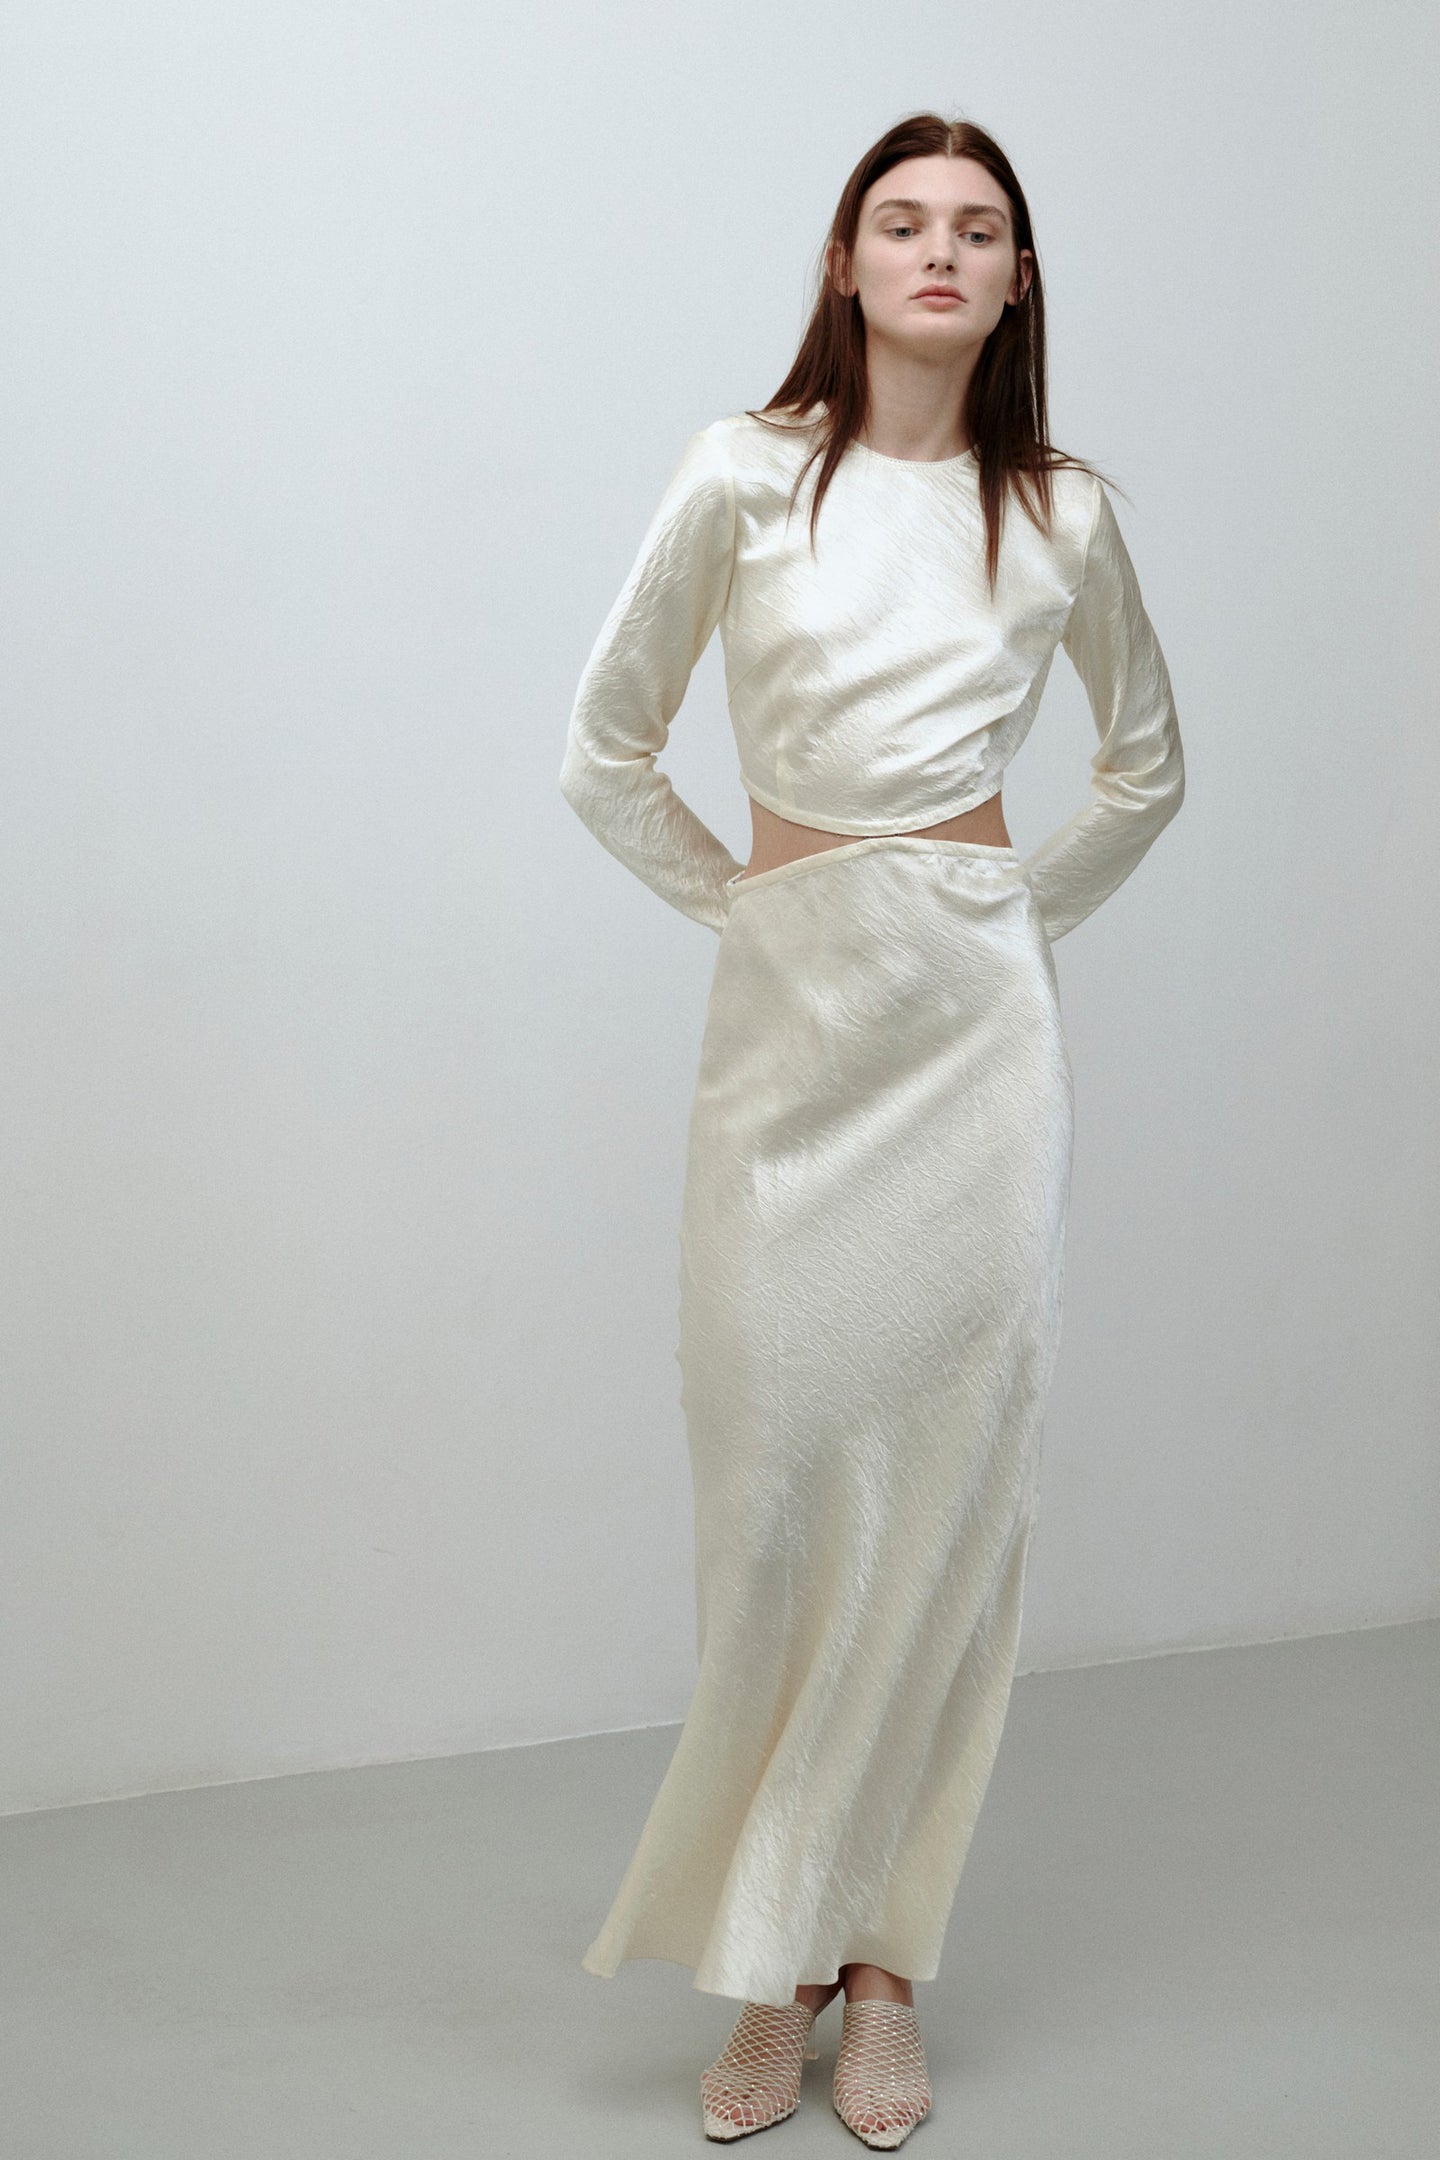 Model in ivory Martha dress